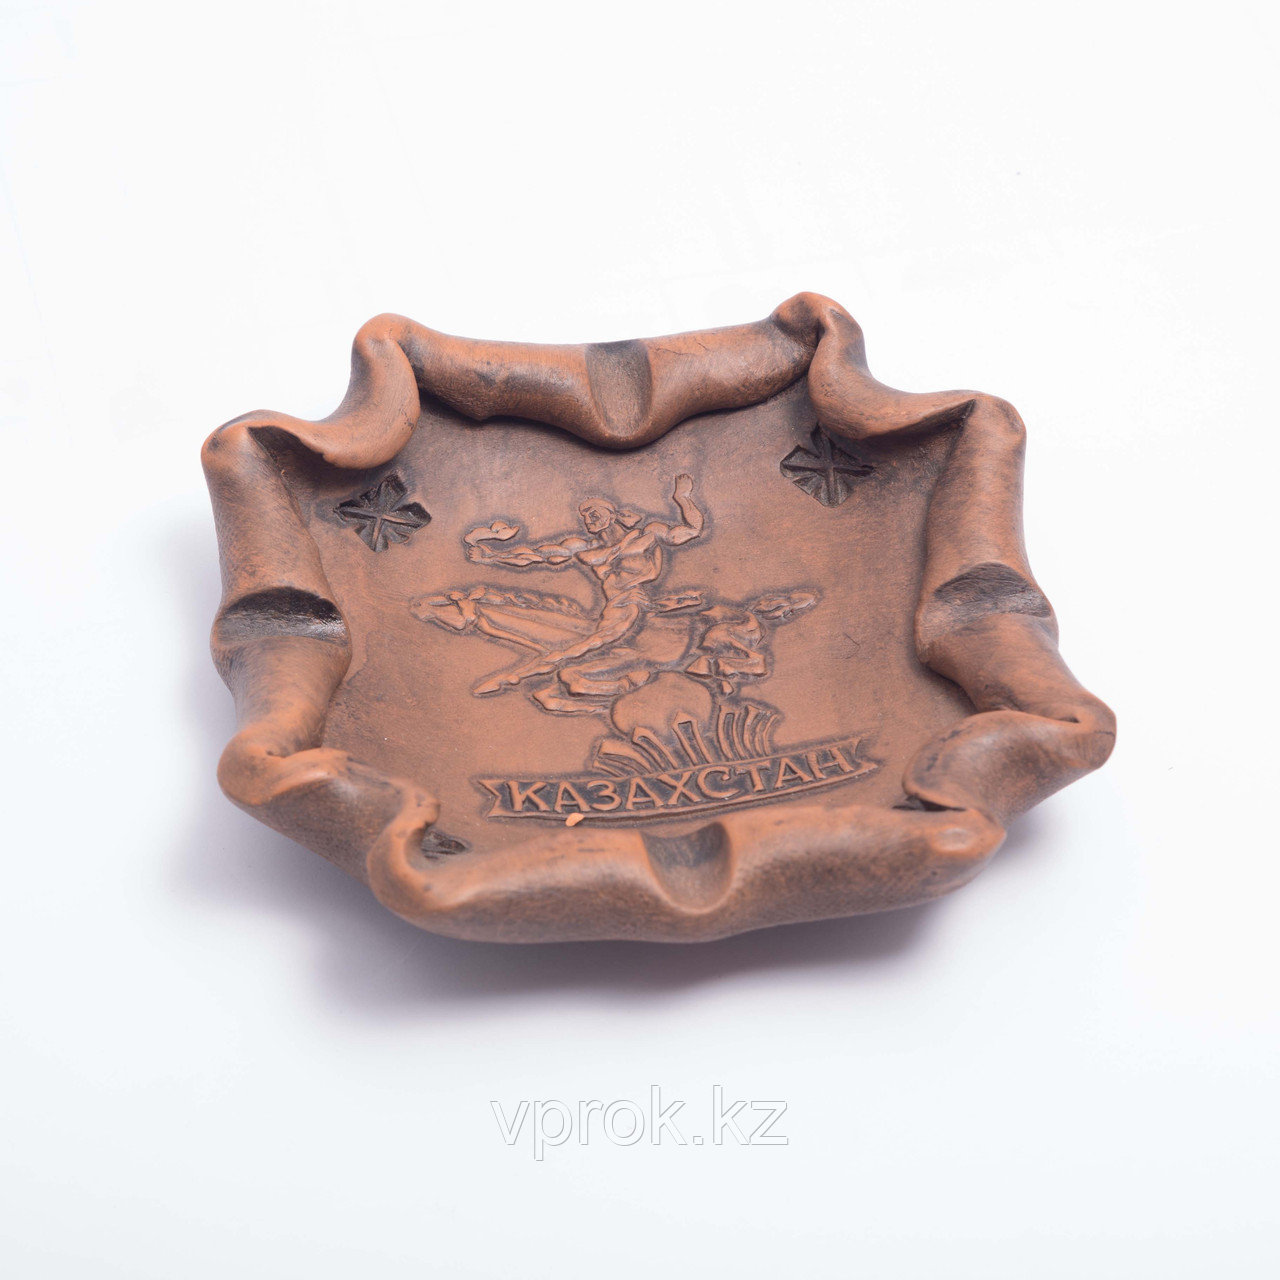 Пепельница глиняная "Казахский батыр" 10*10 см